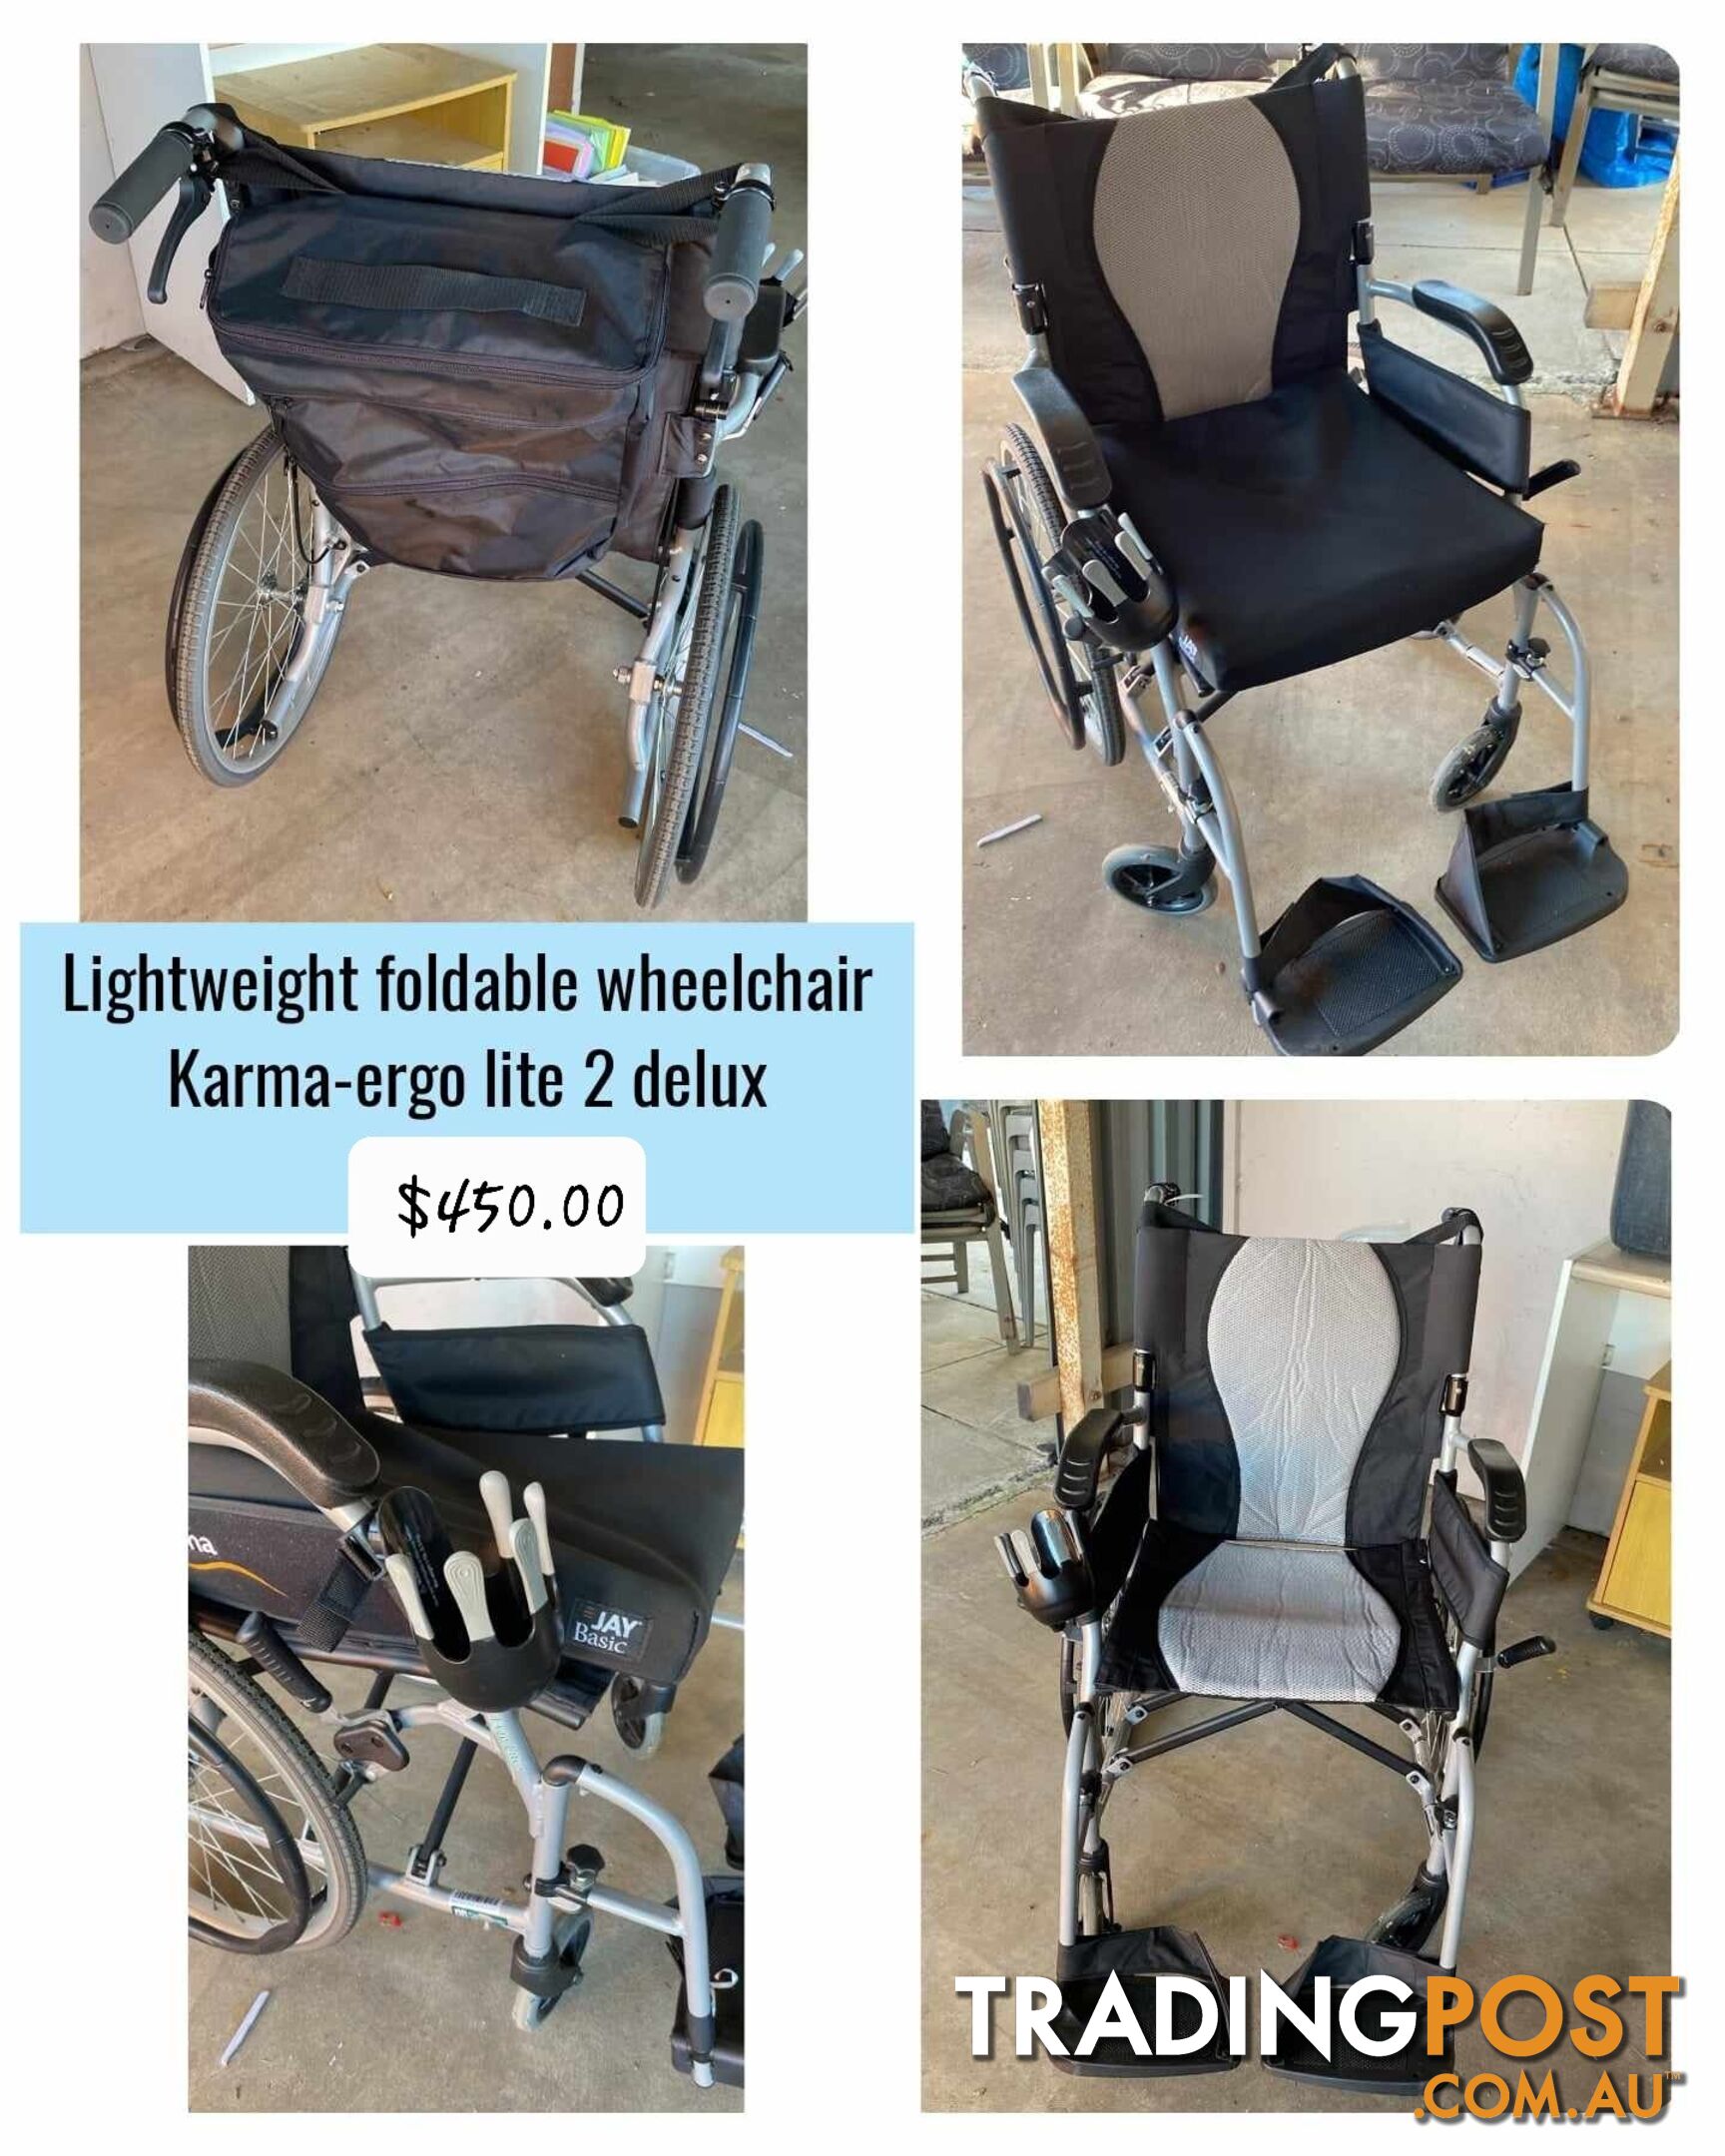 Karma-ergo lite 2 delux foldable wheelchair